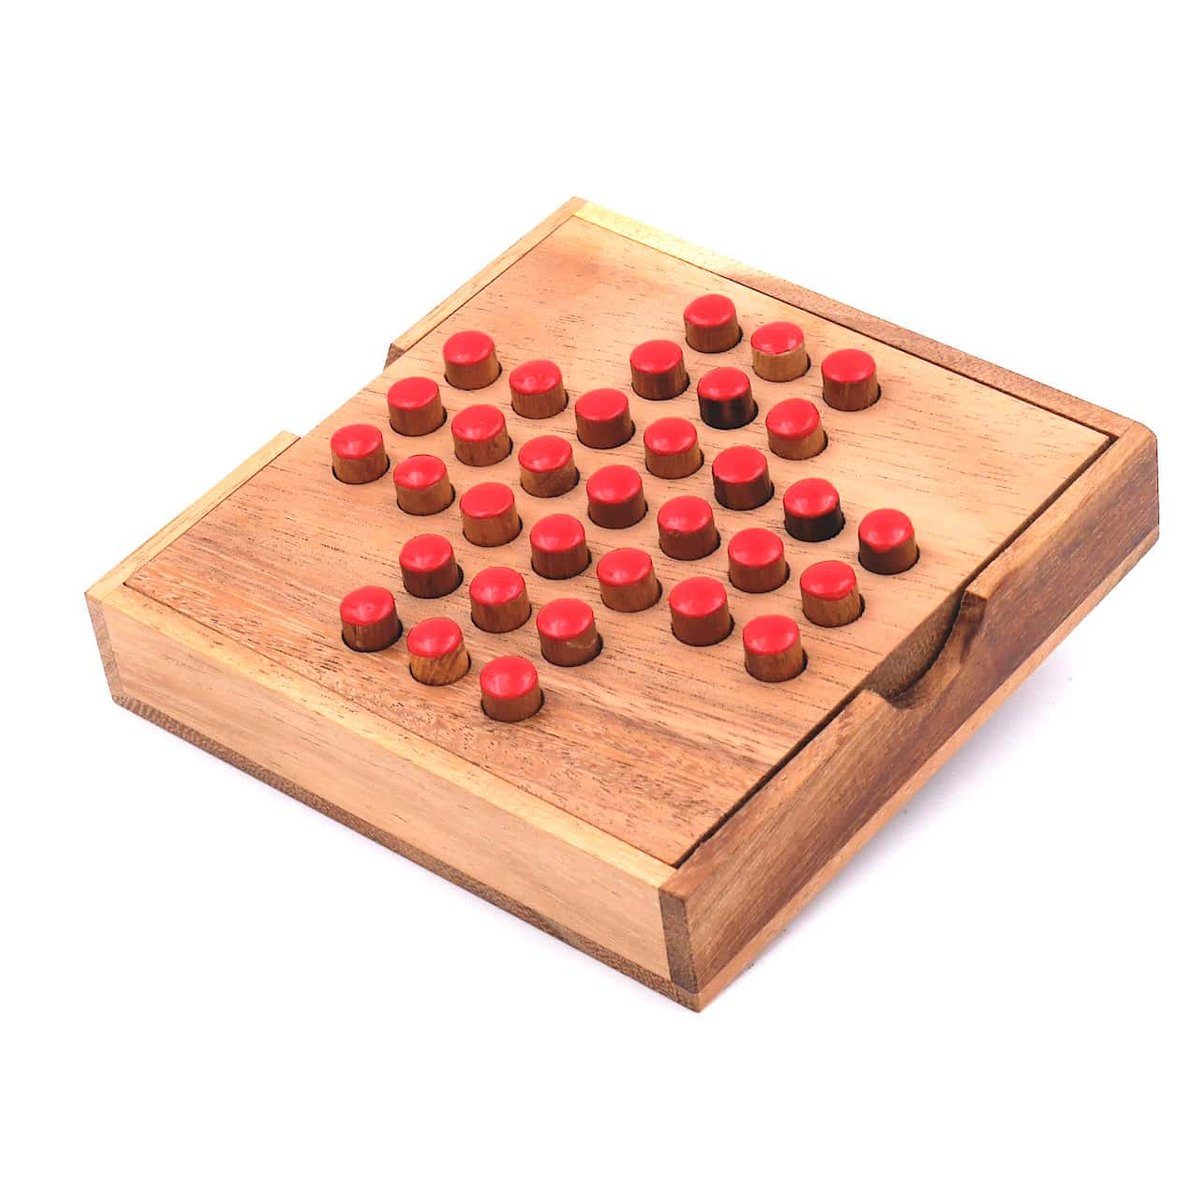 Holzspiel Spiel, - ROMBOL Holz, rot Steckspiel Solitaire Klassiker Denkspiele unterhaltsamer edlem aus